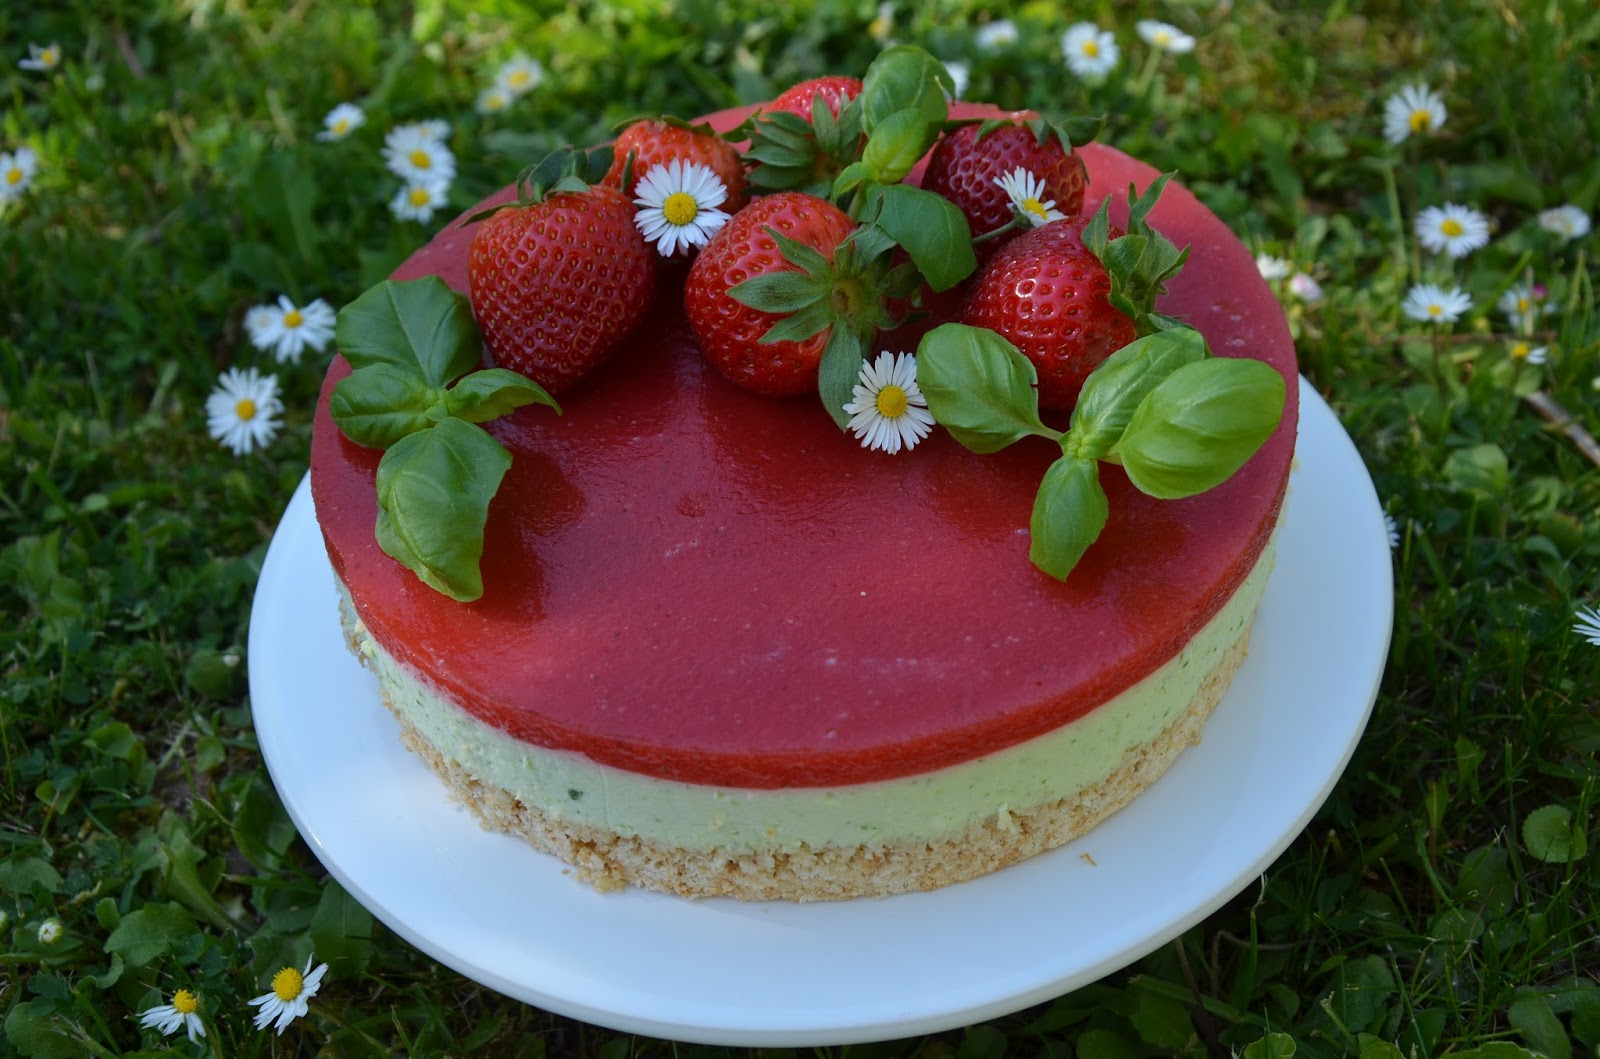 Erdbeer-Basilikum-Cheesecake ohne Backen - Rezeptra - Food and More